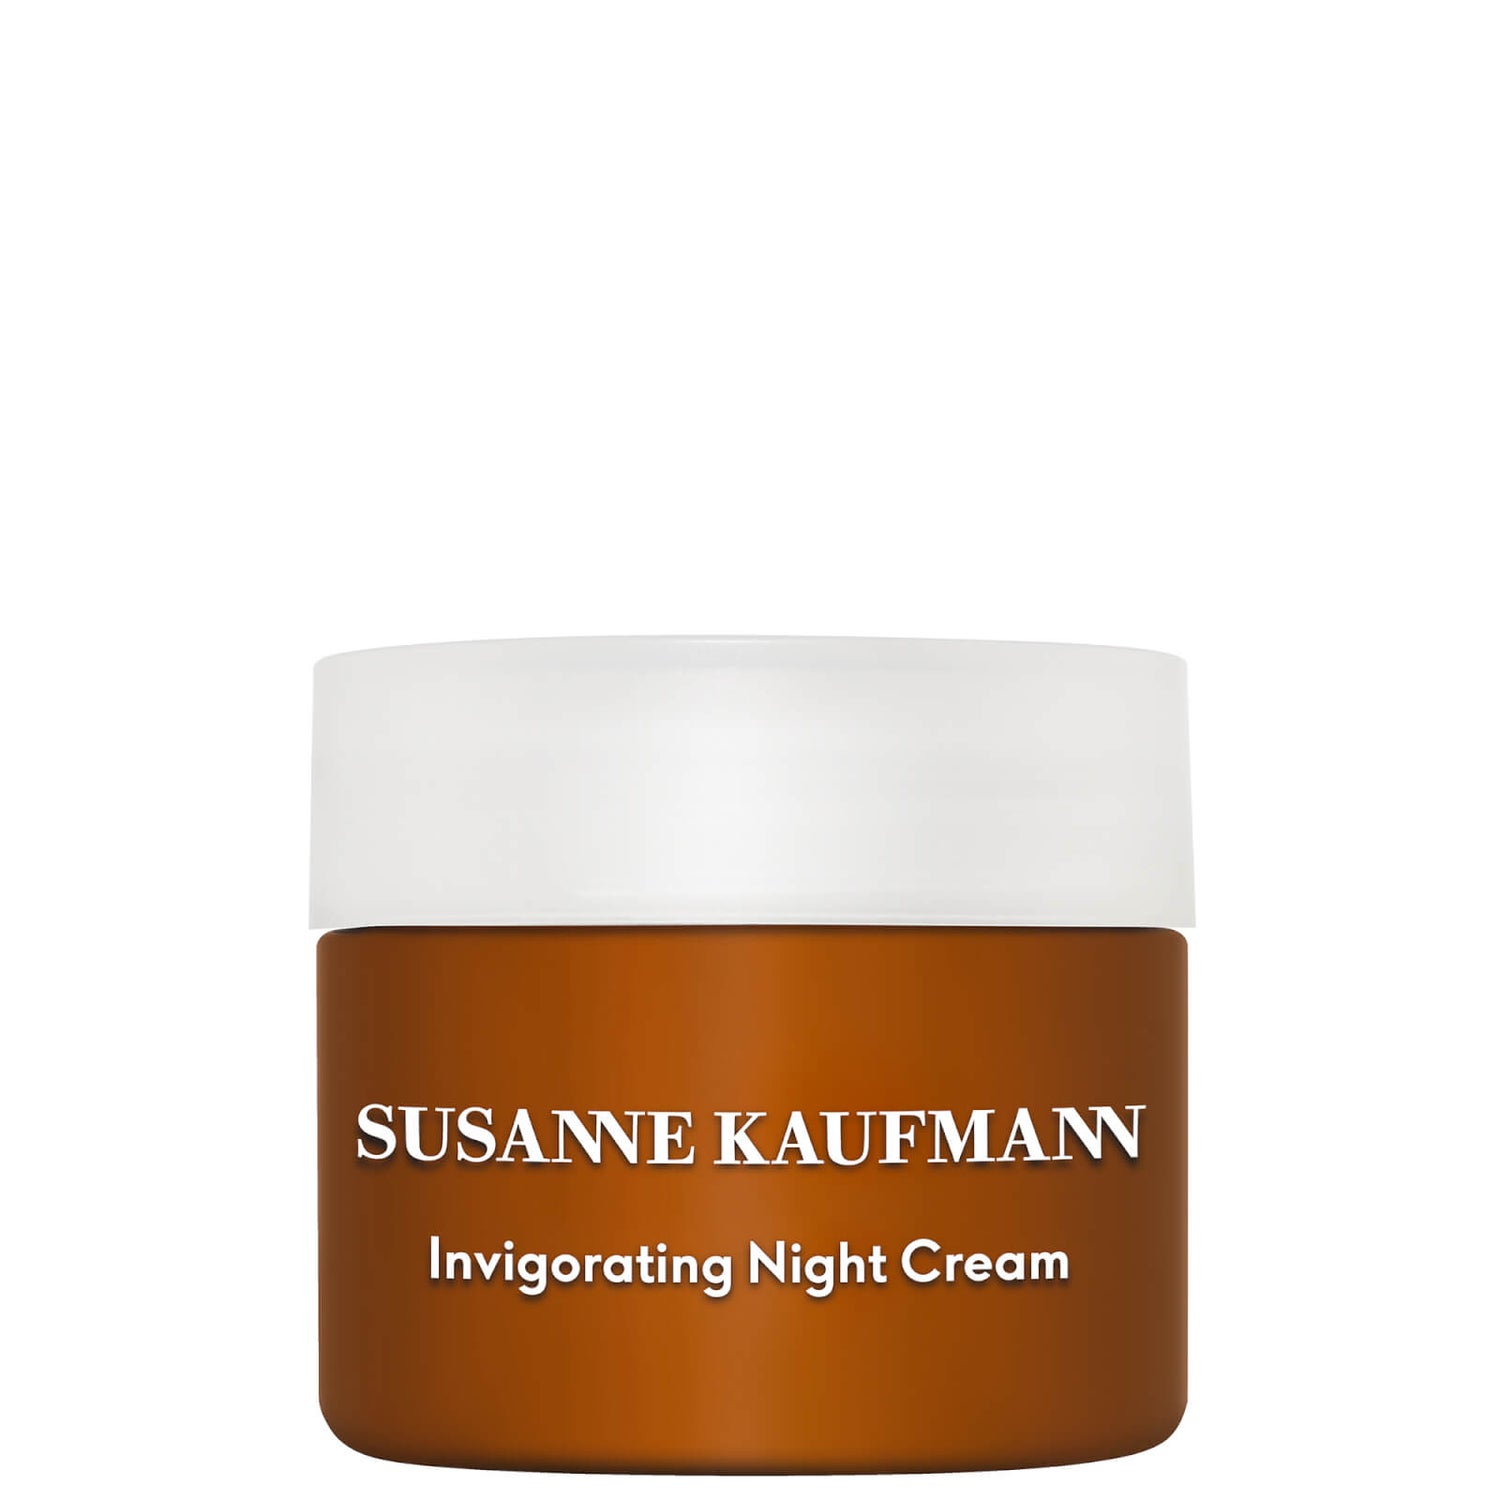 Susanne Kaufmann Invigorating Night Cream Line M